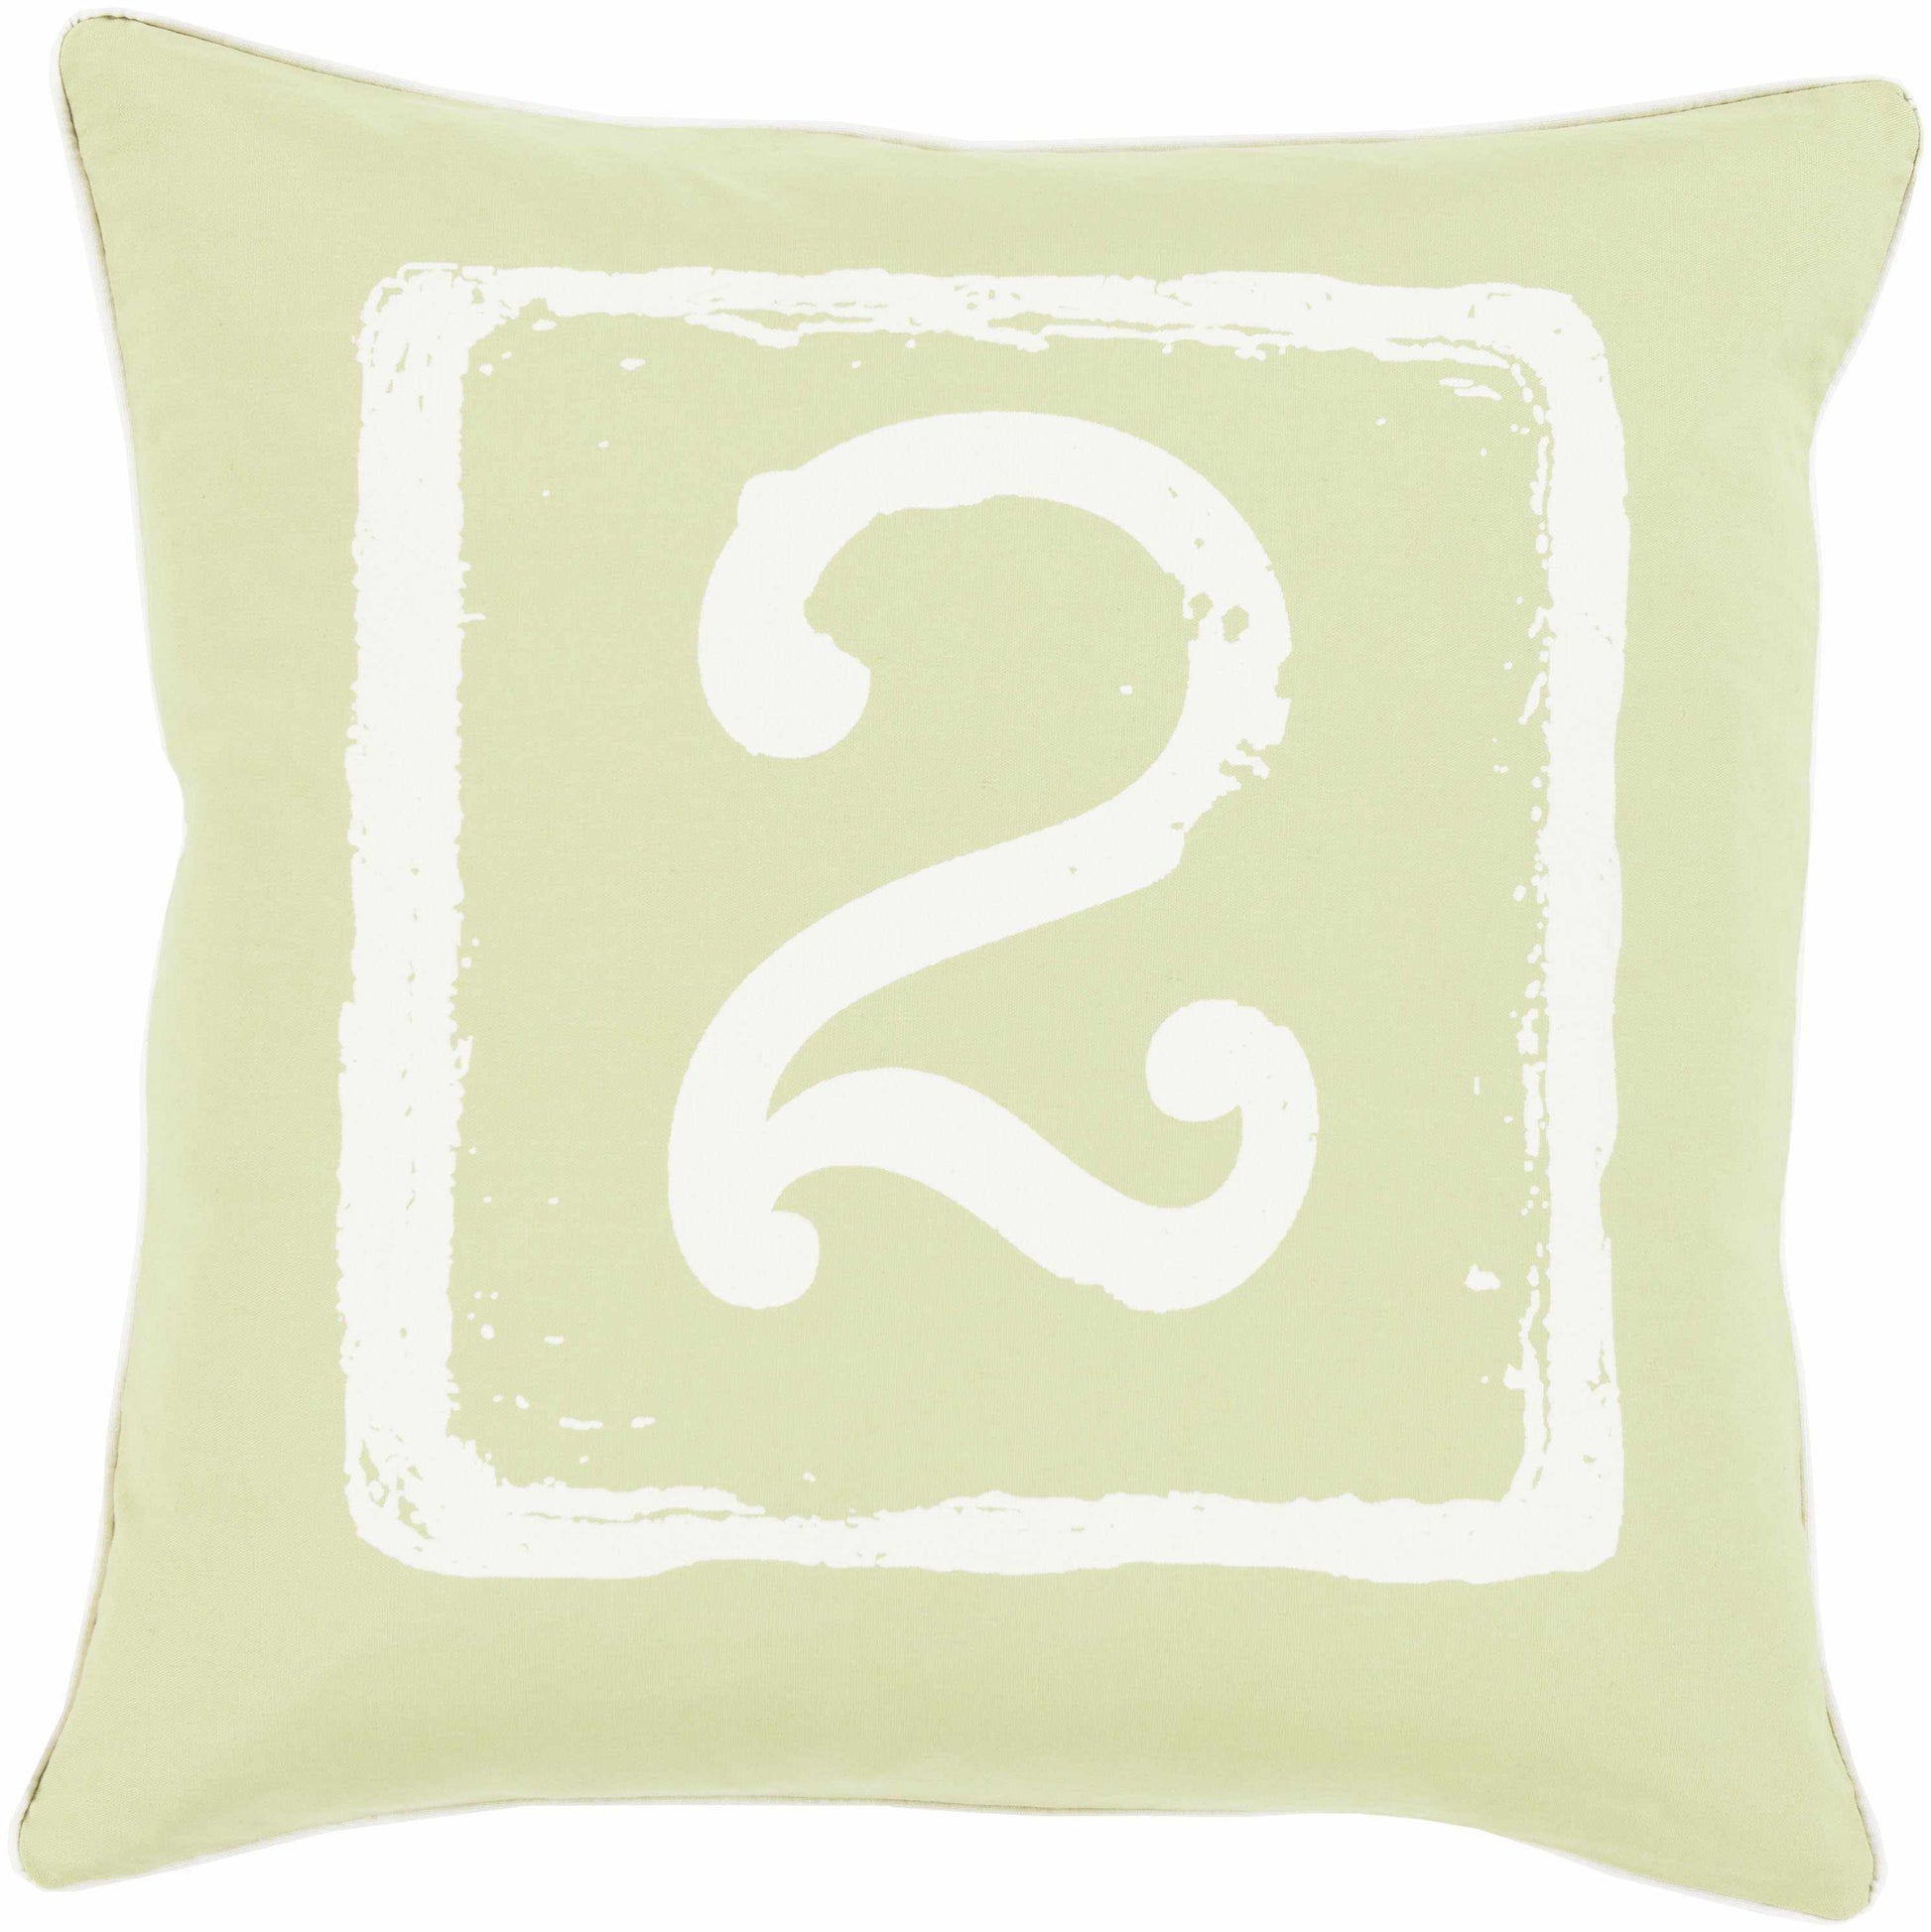 Bertem Lime Pillow Cover